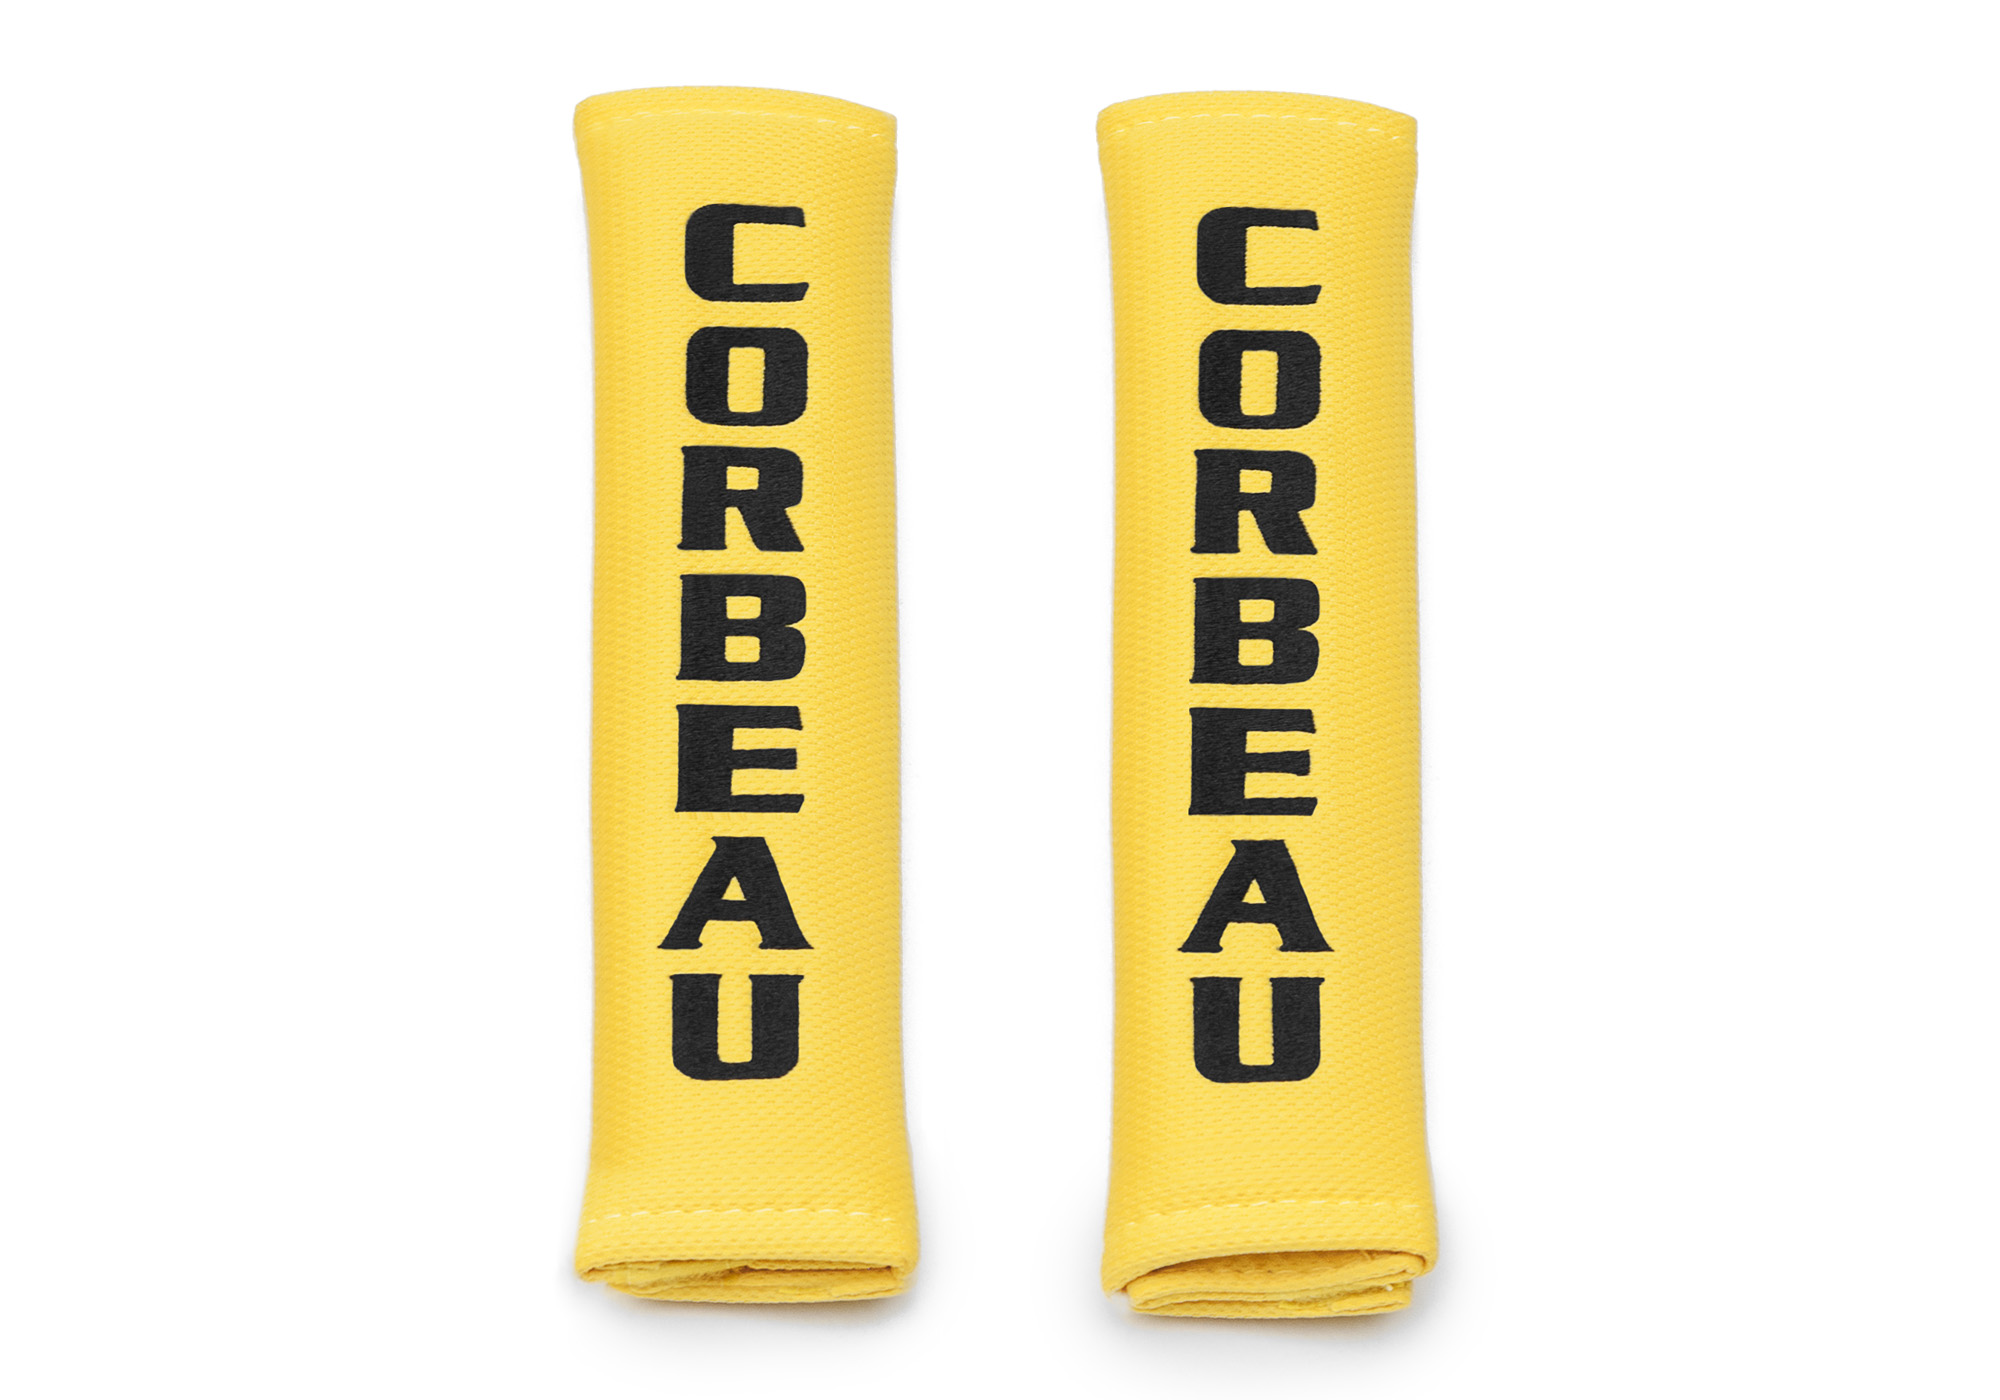 Corbeau Racing Harness Pads, Pair of 2" Yellow Pads, 40403